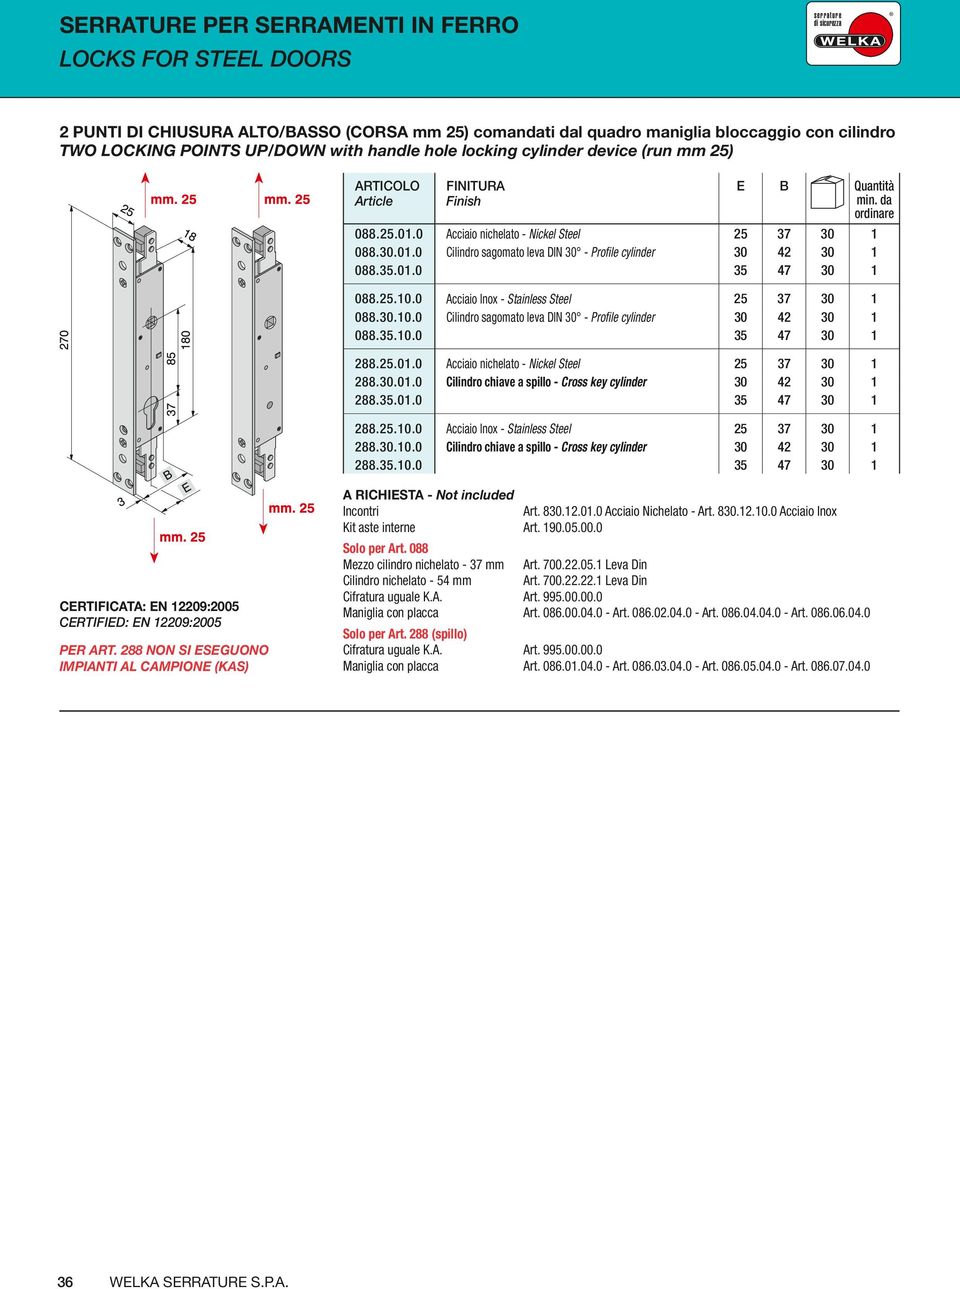 0 Acciaio Inox - Stainlss Stl 25 37 30 1 088.30.10.0 Cilindro sagomato lva DIN 30 - Profil cylindr 30 42 30 1 088.35.10.0 35 47 30 1 288.25.01.